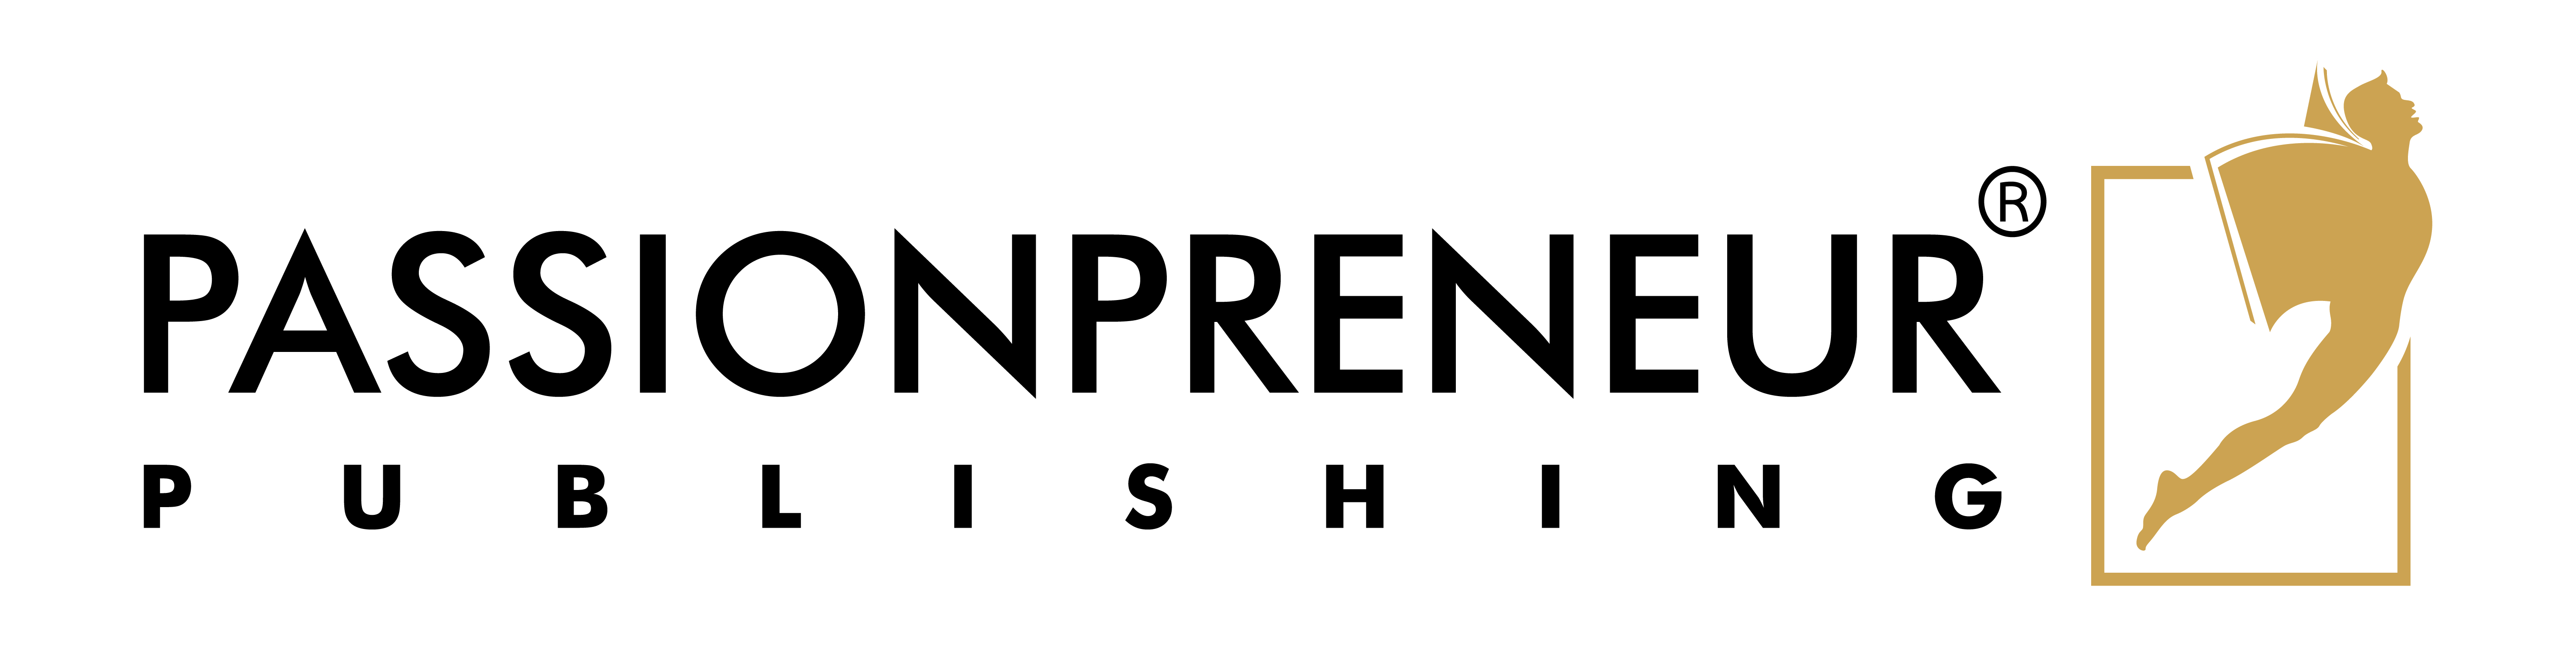 Passionpreneur Publishing Logo